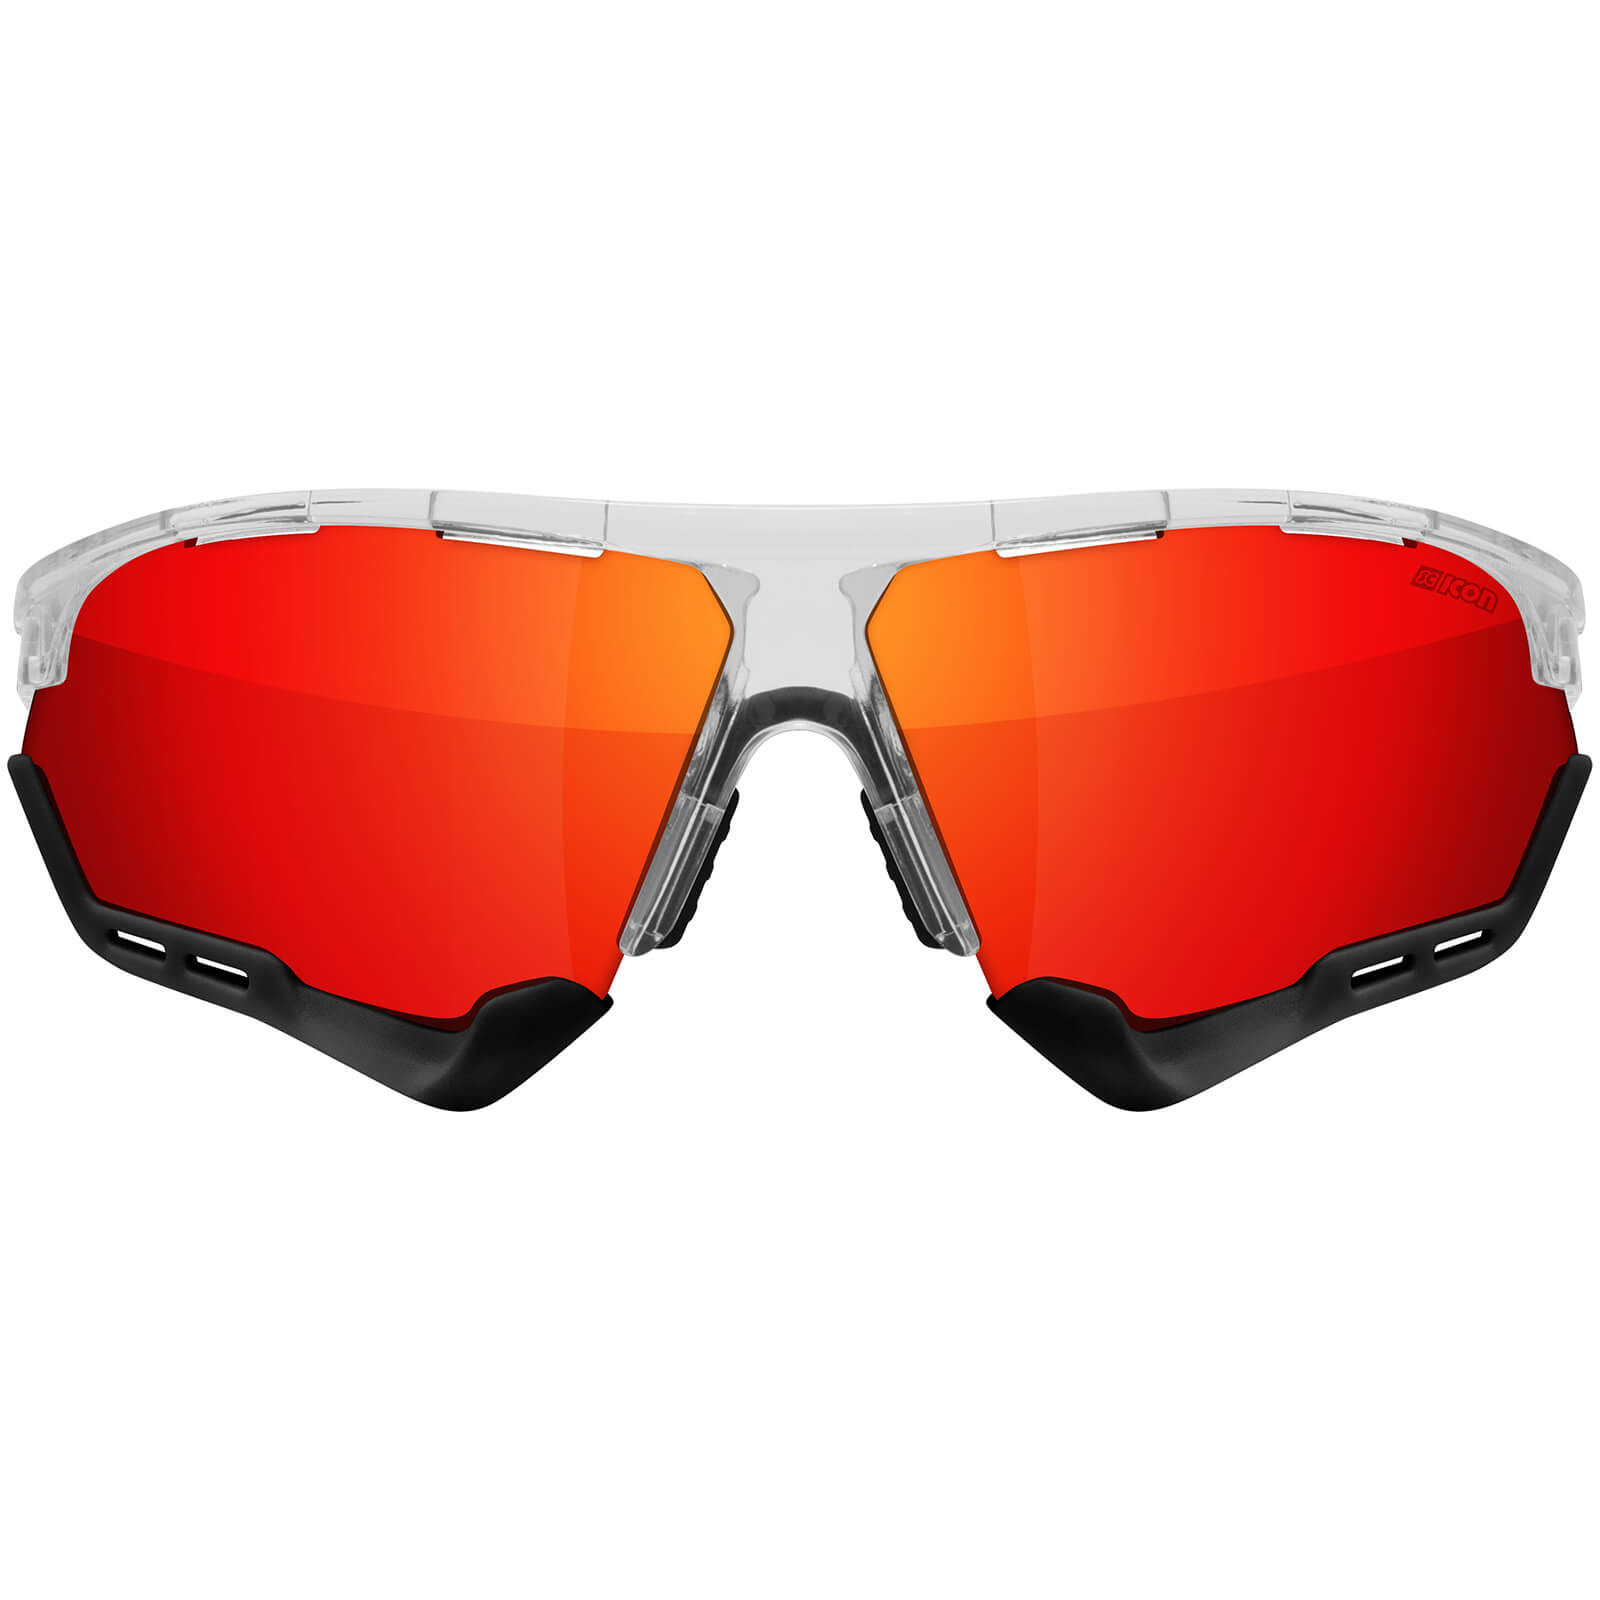 Scicon Aerocomfort Xl Road Sunglasses - Crystal Gloss - Multilaser Red